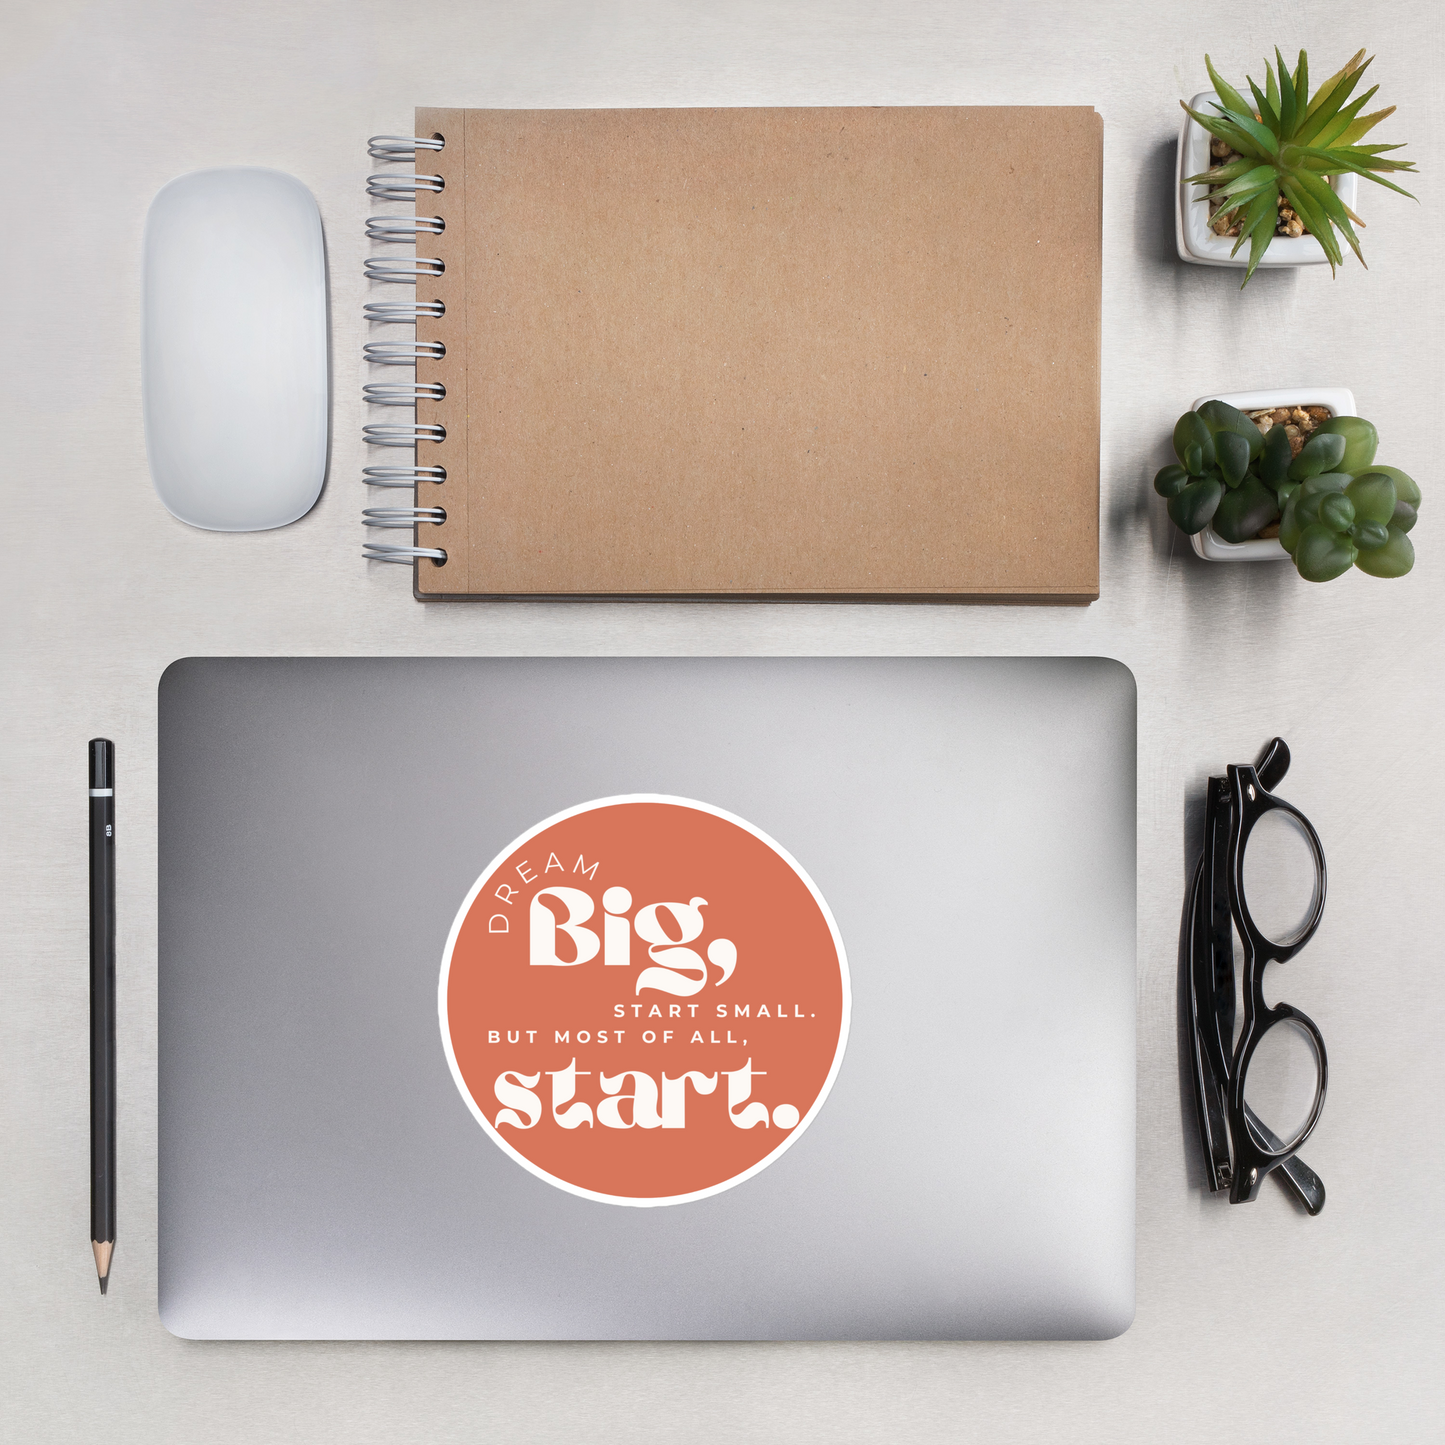 Etsy Seller Sticker - Dream Big & Start